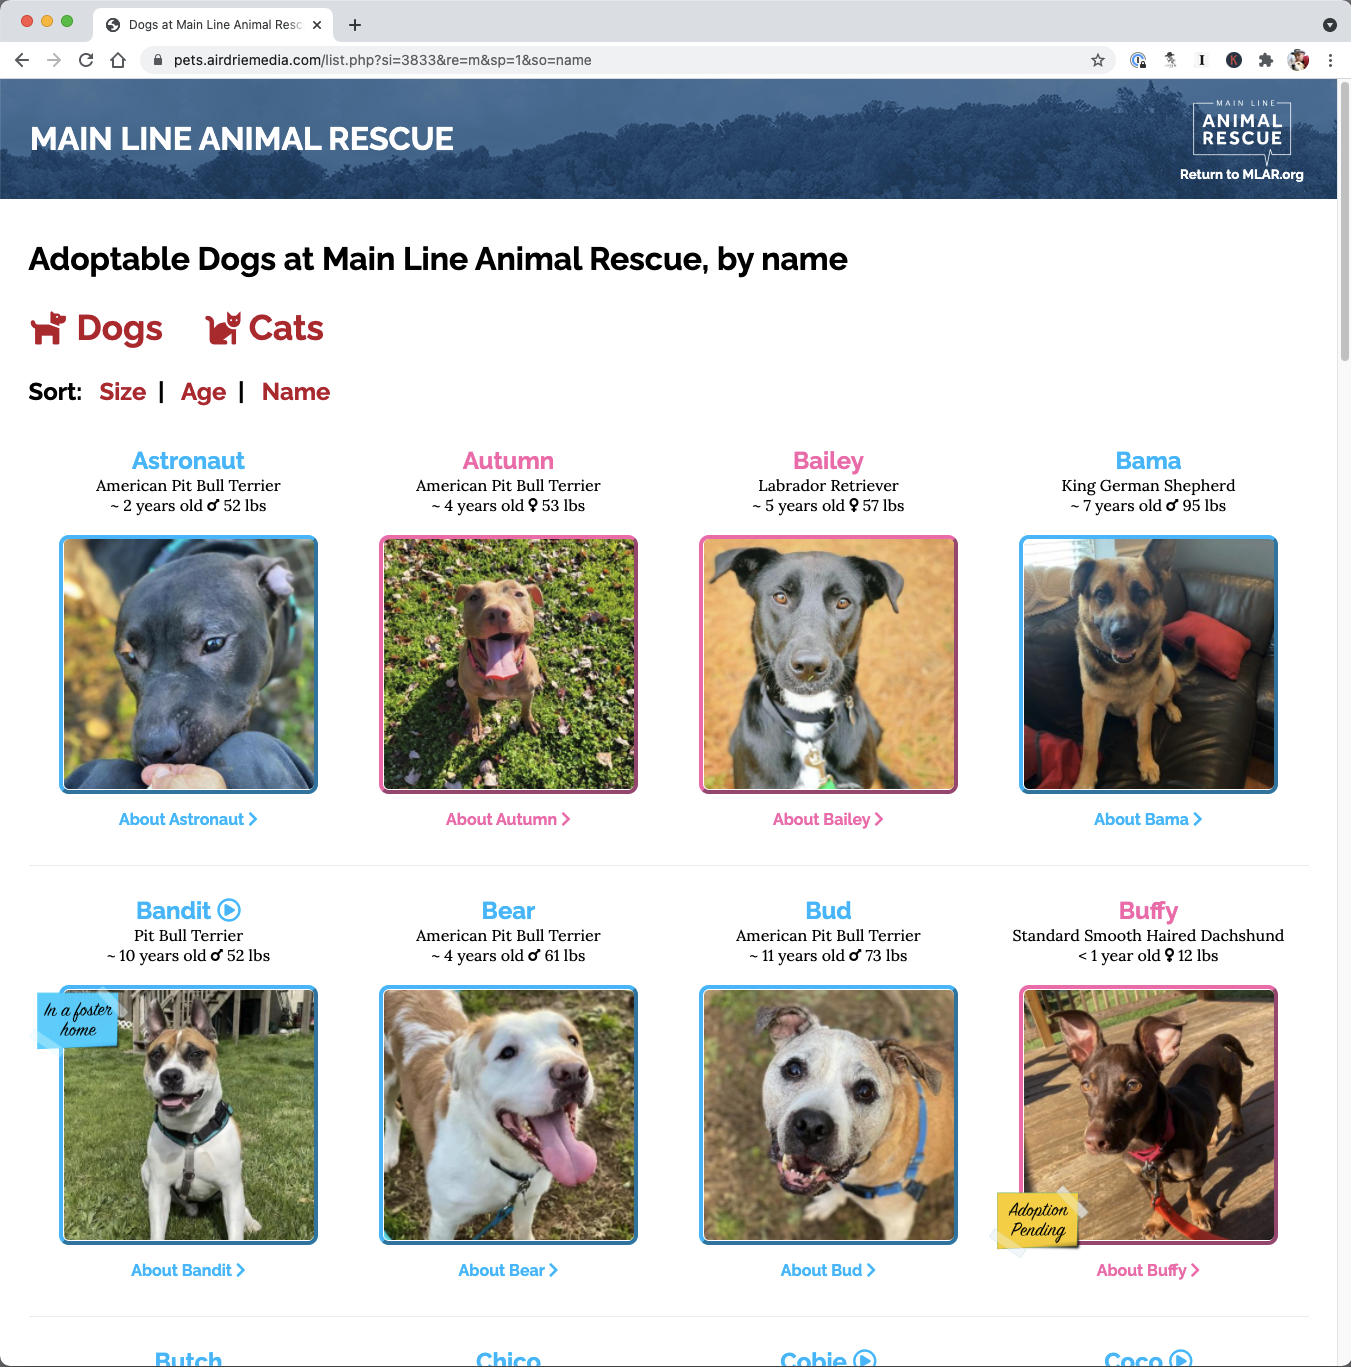 Pet listings on the MLAR.org website